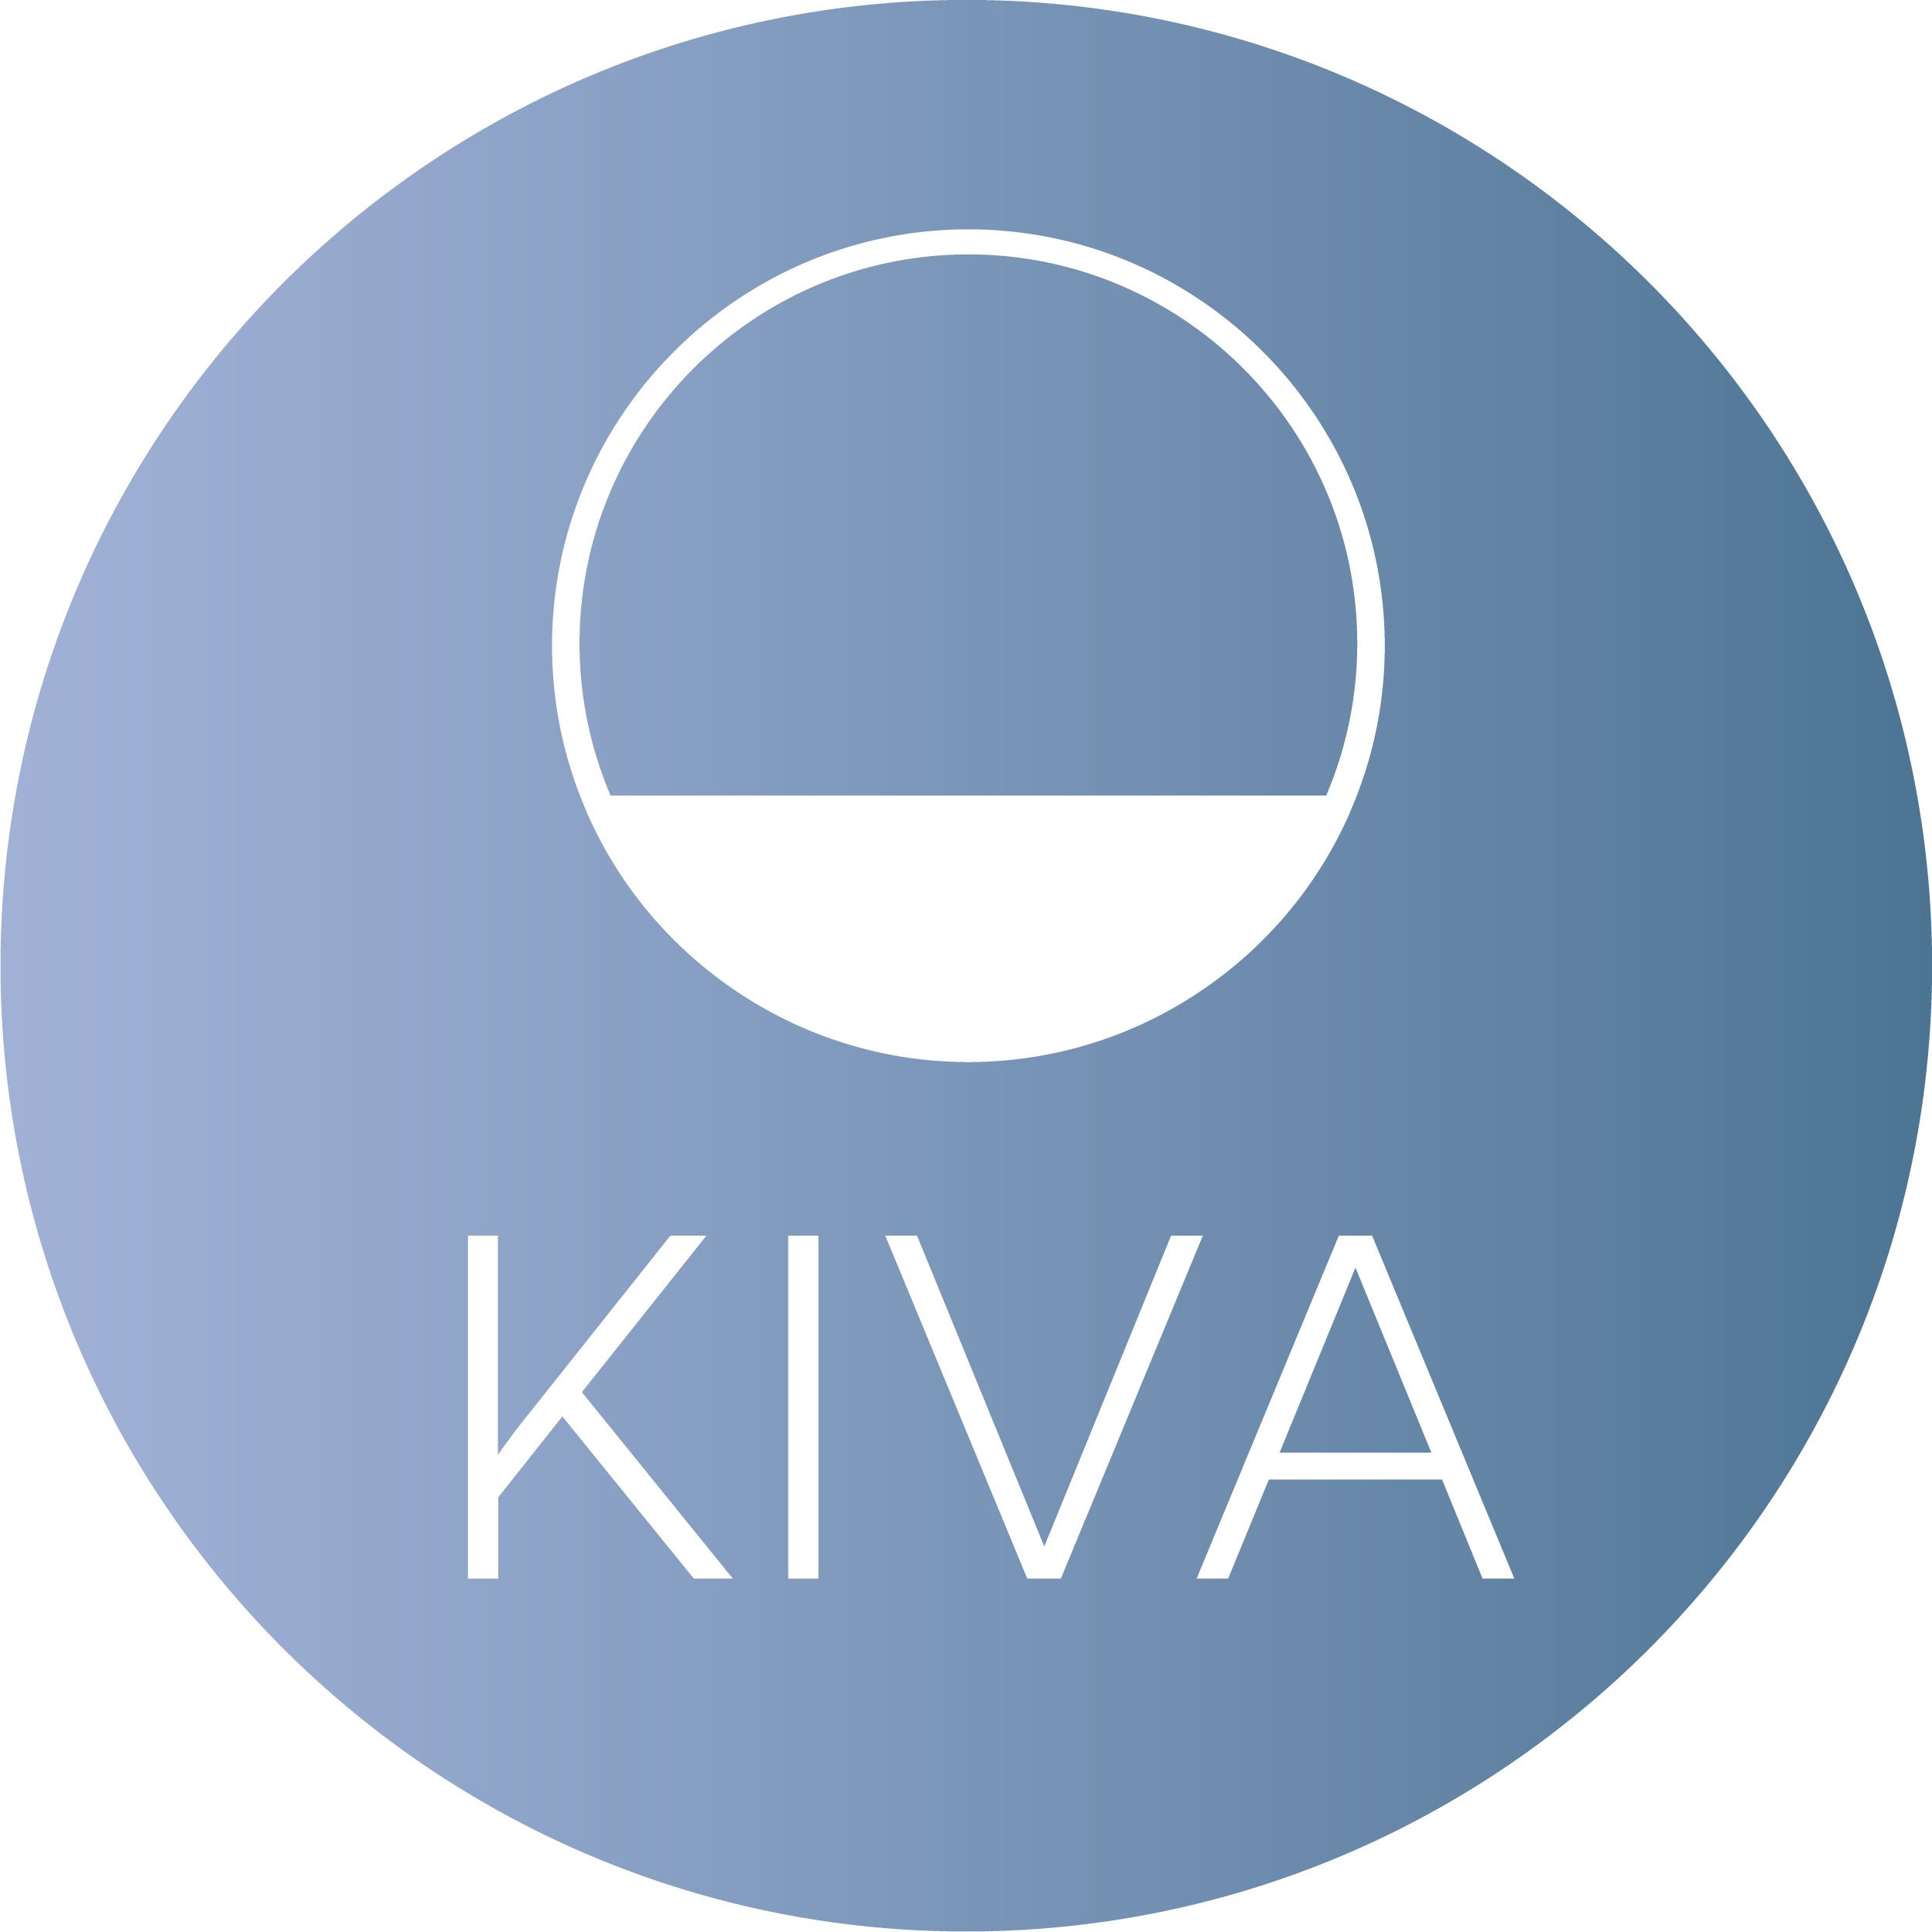 KIVA Pilates